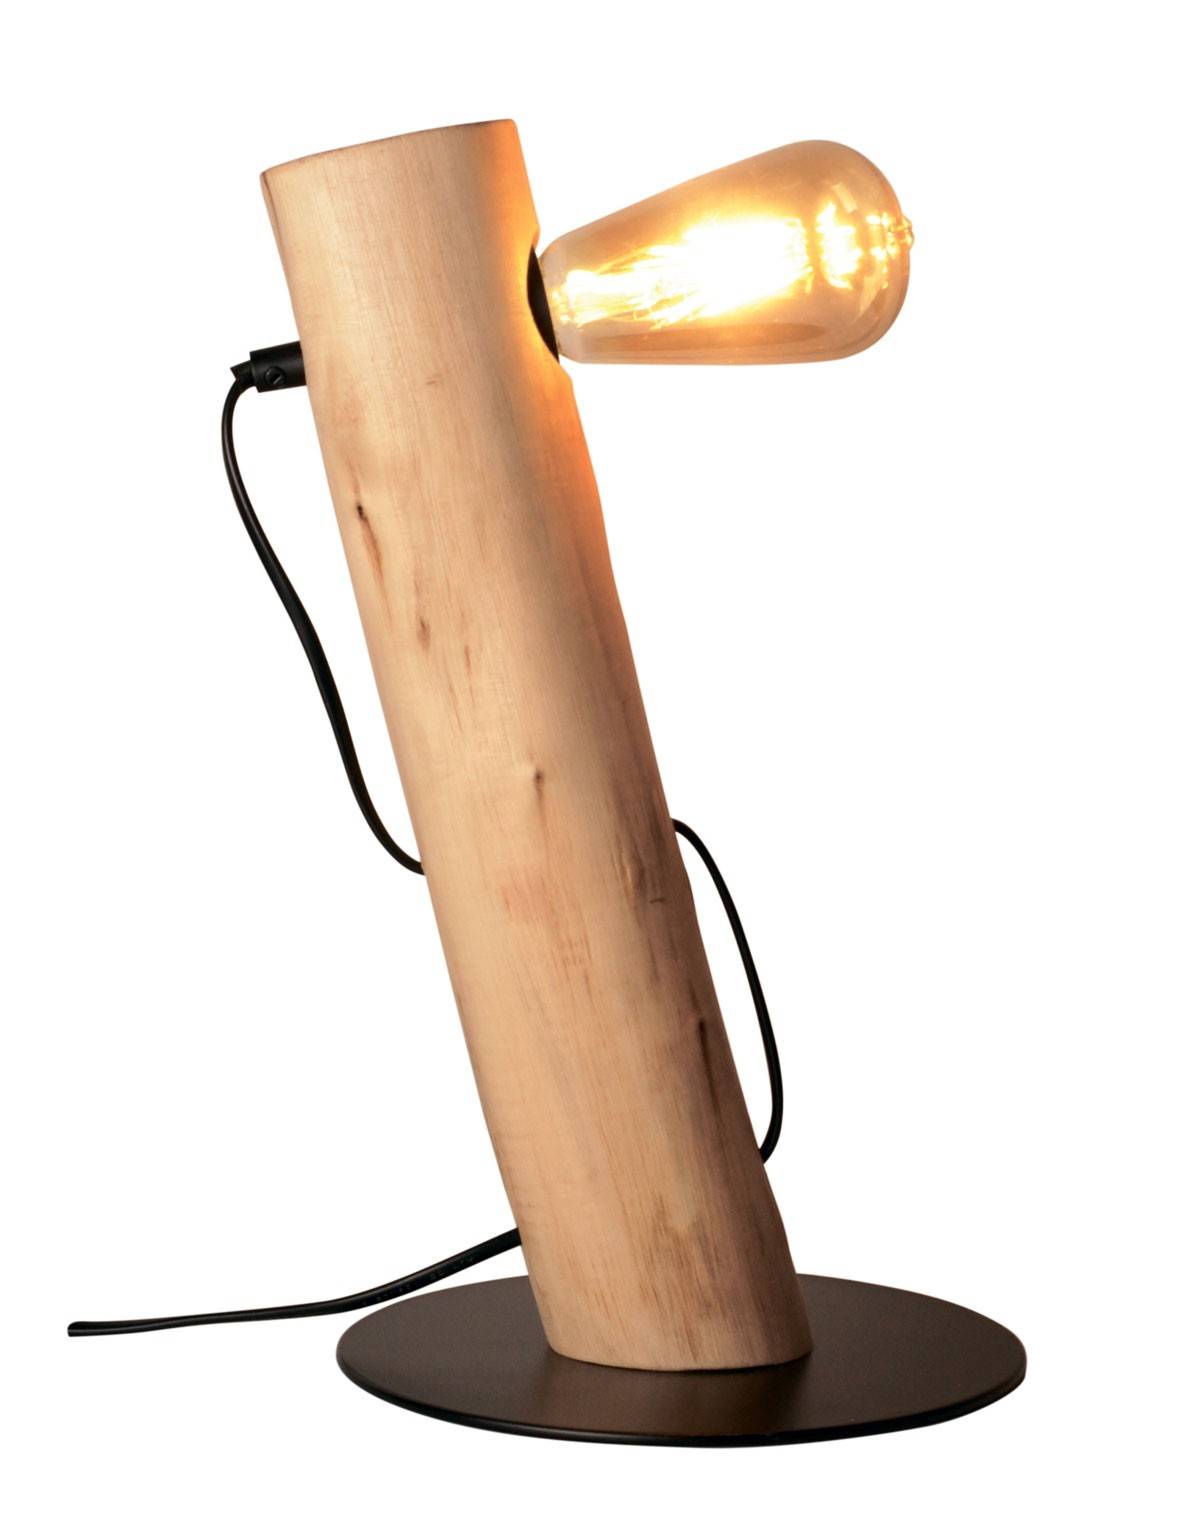 Holztischlampe E27 - aus Designer-Tischlampen Holz